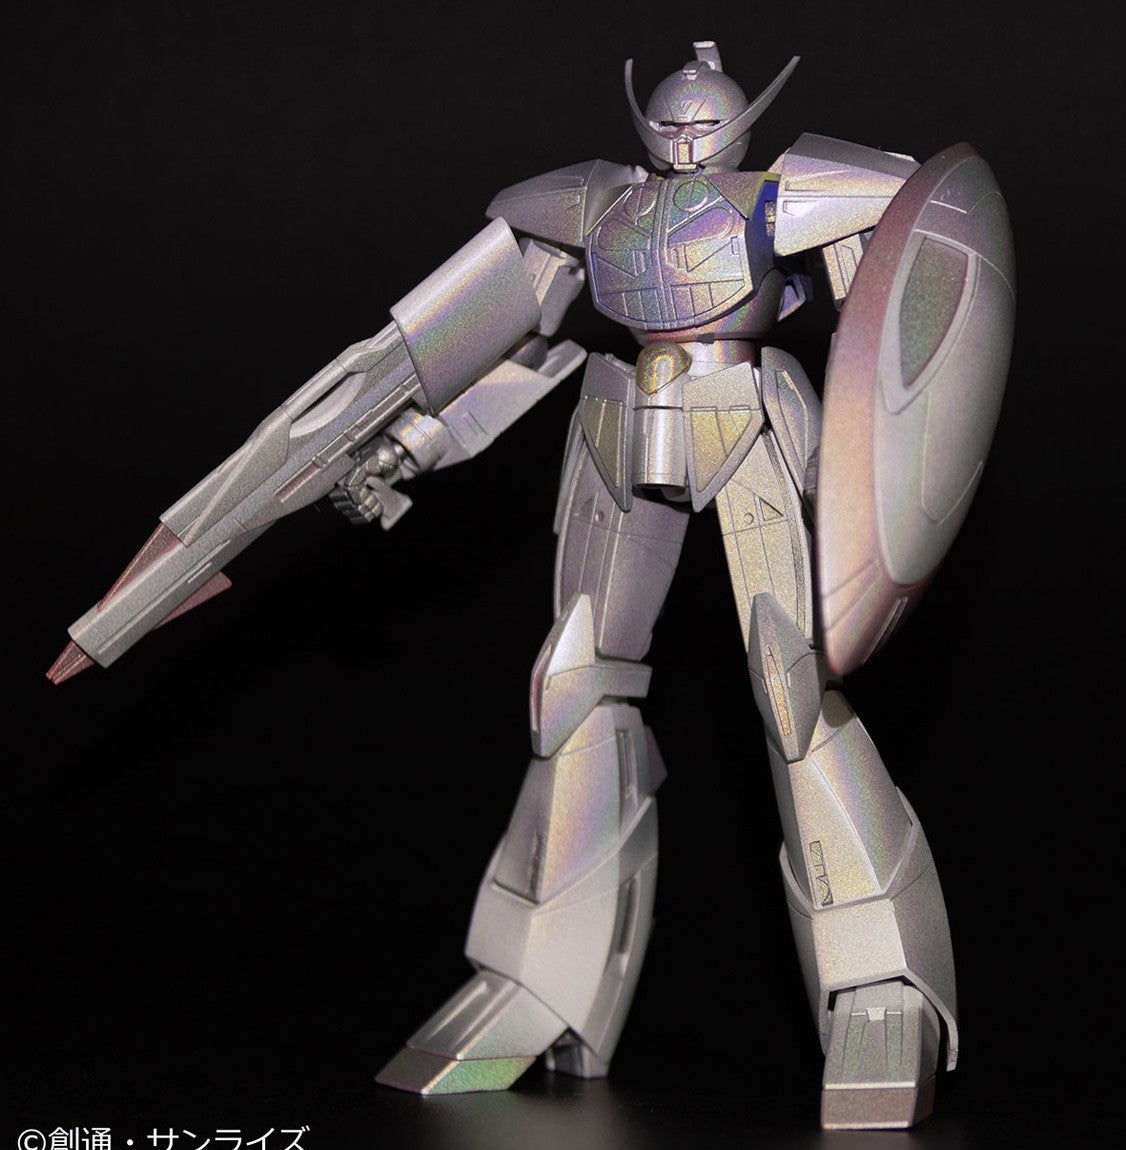 XGM201 Gundam Marker EX Moonlight Butterfly Holo Silver